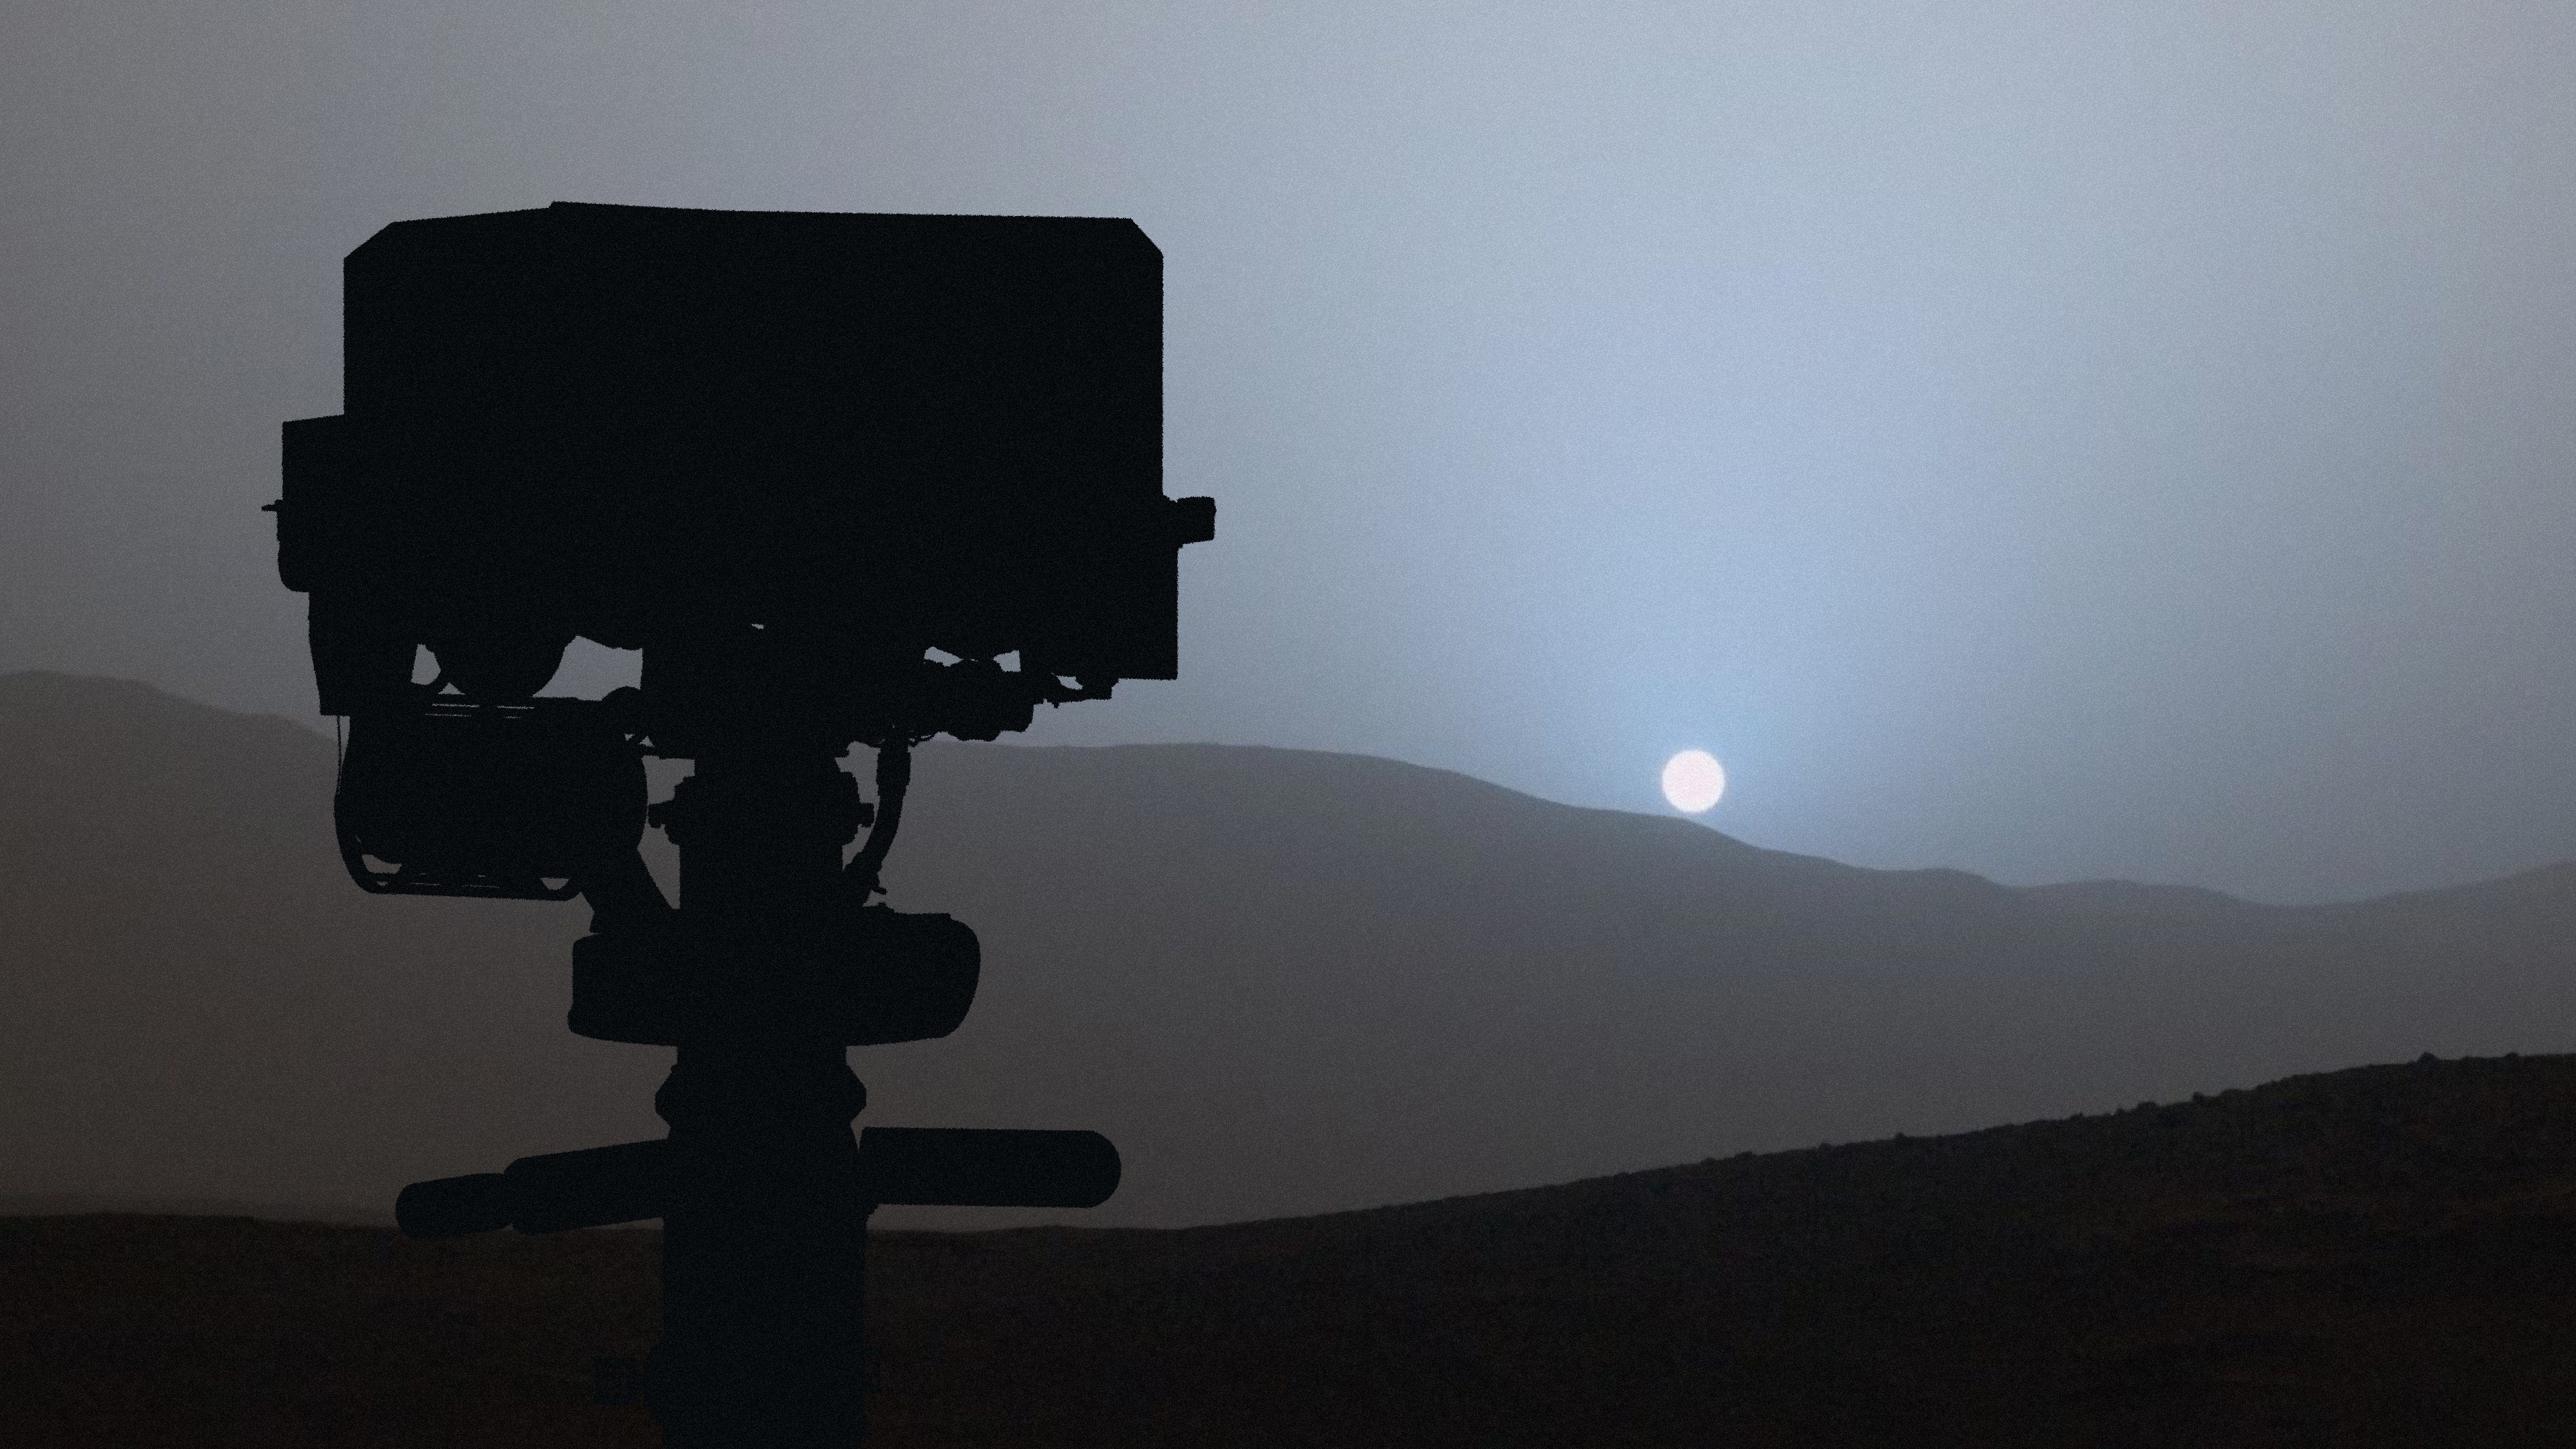 Mars Curiosity Rover, Space exploration, Perseverance mission, Artistic representation, 3840x2160 4K Desktop